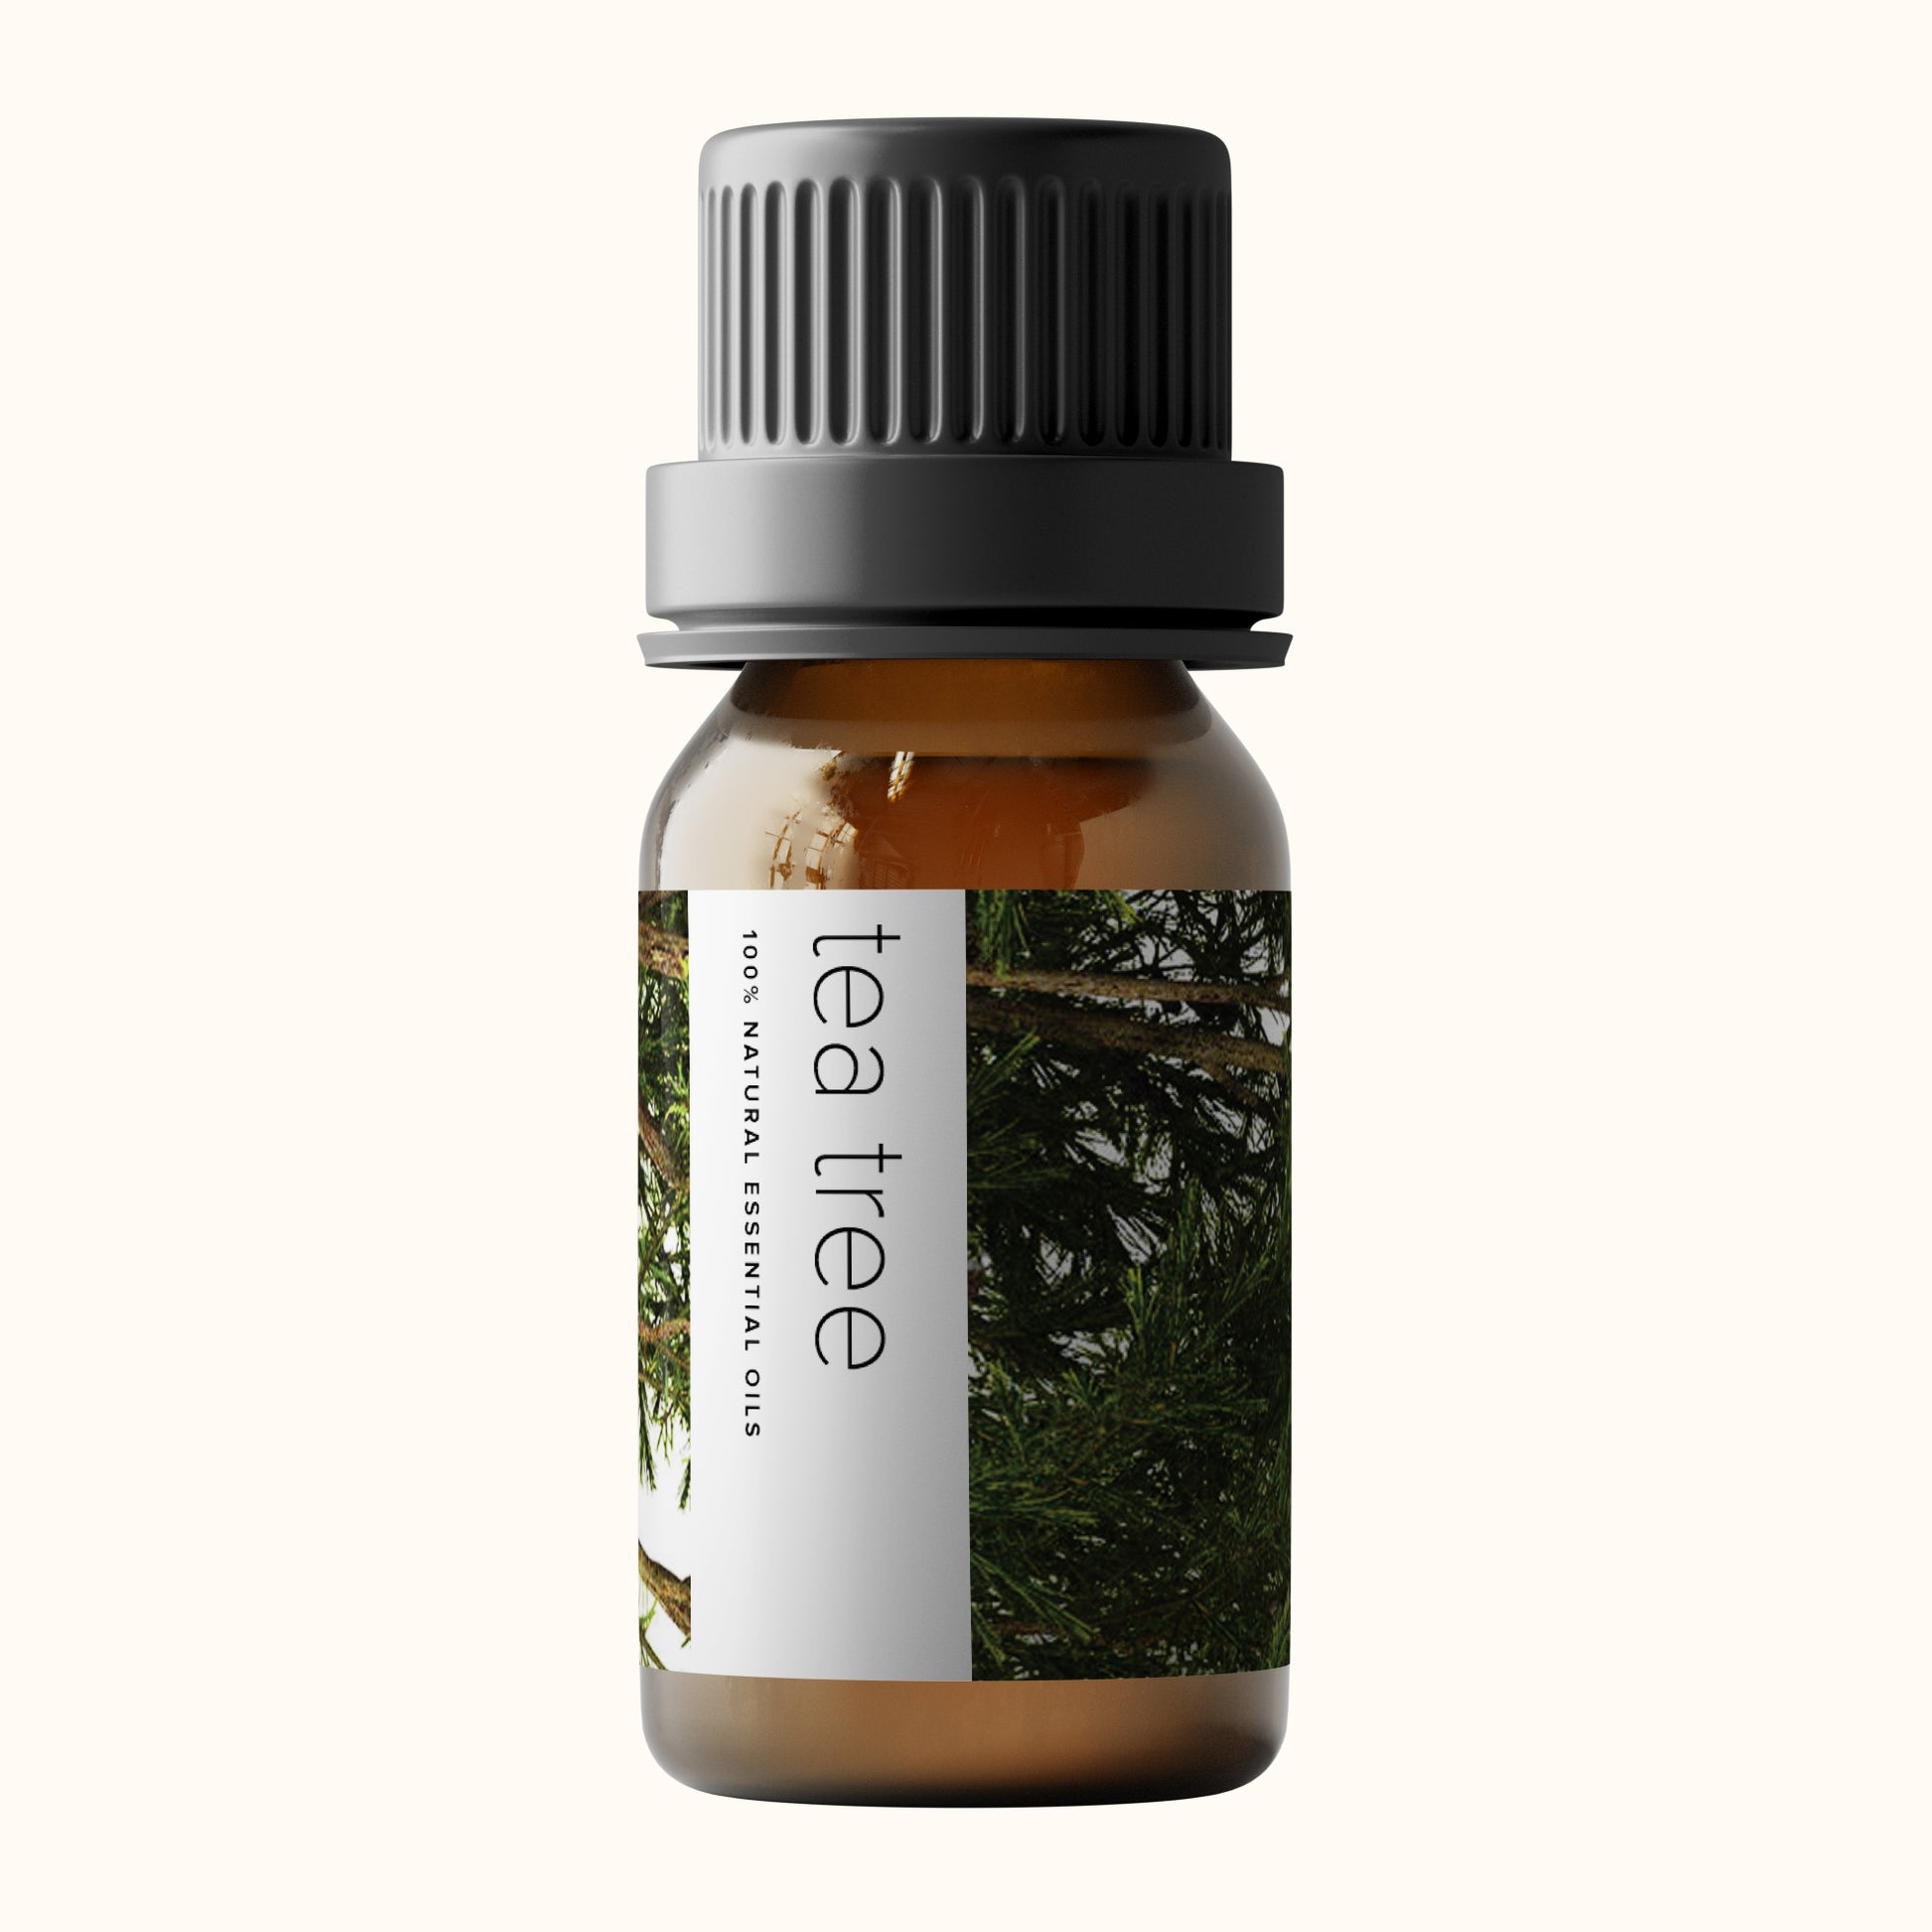 Tea Tree Essential Oil Benefits – 100% PURE